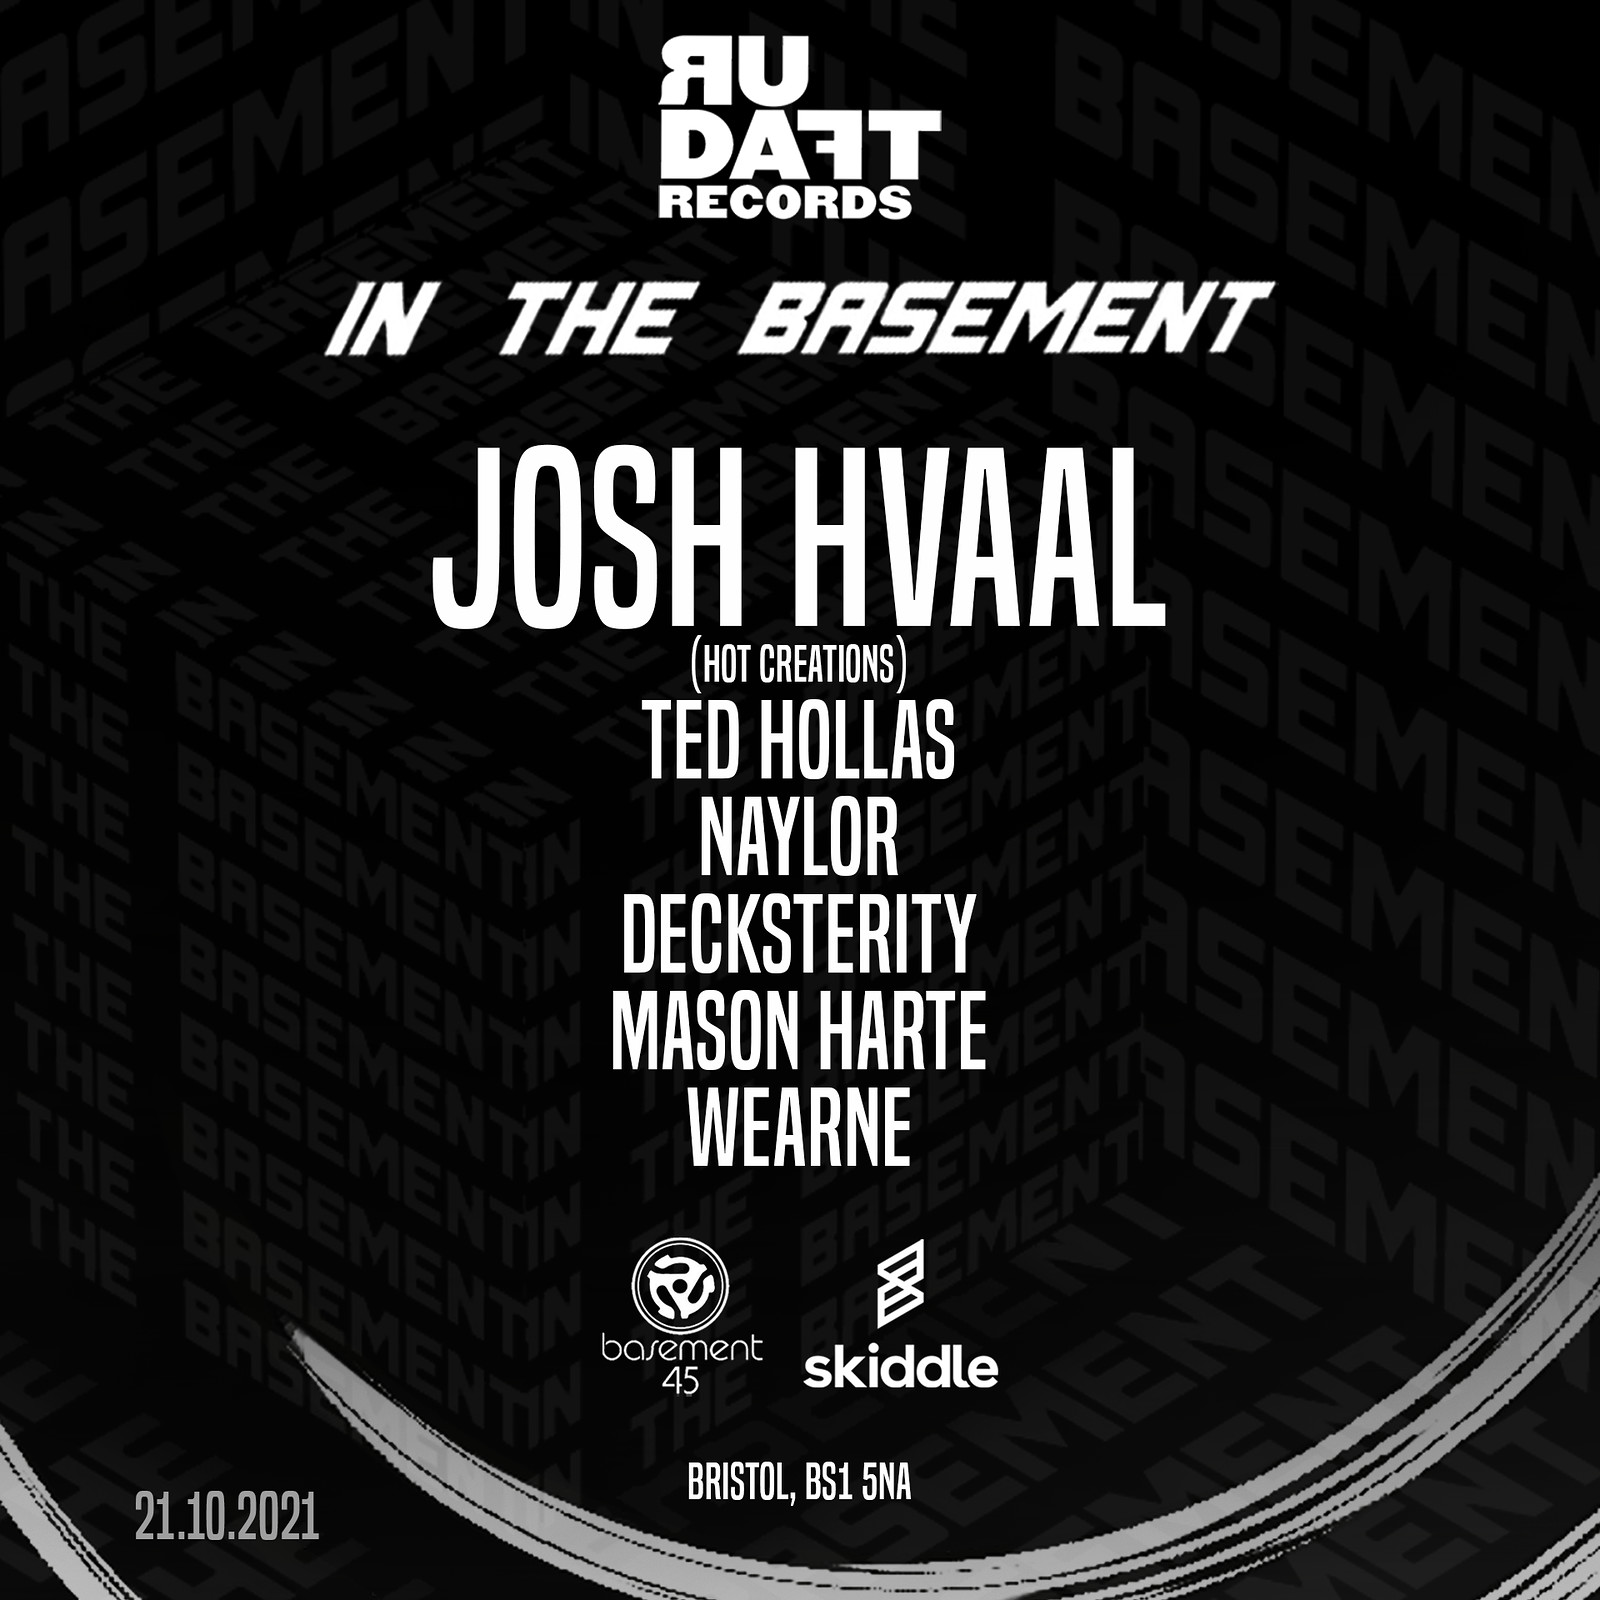 R U Daft Presents Josh Hvaal at Basement 45